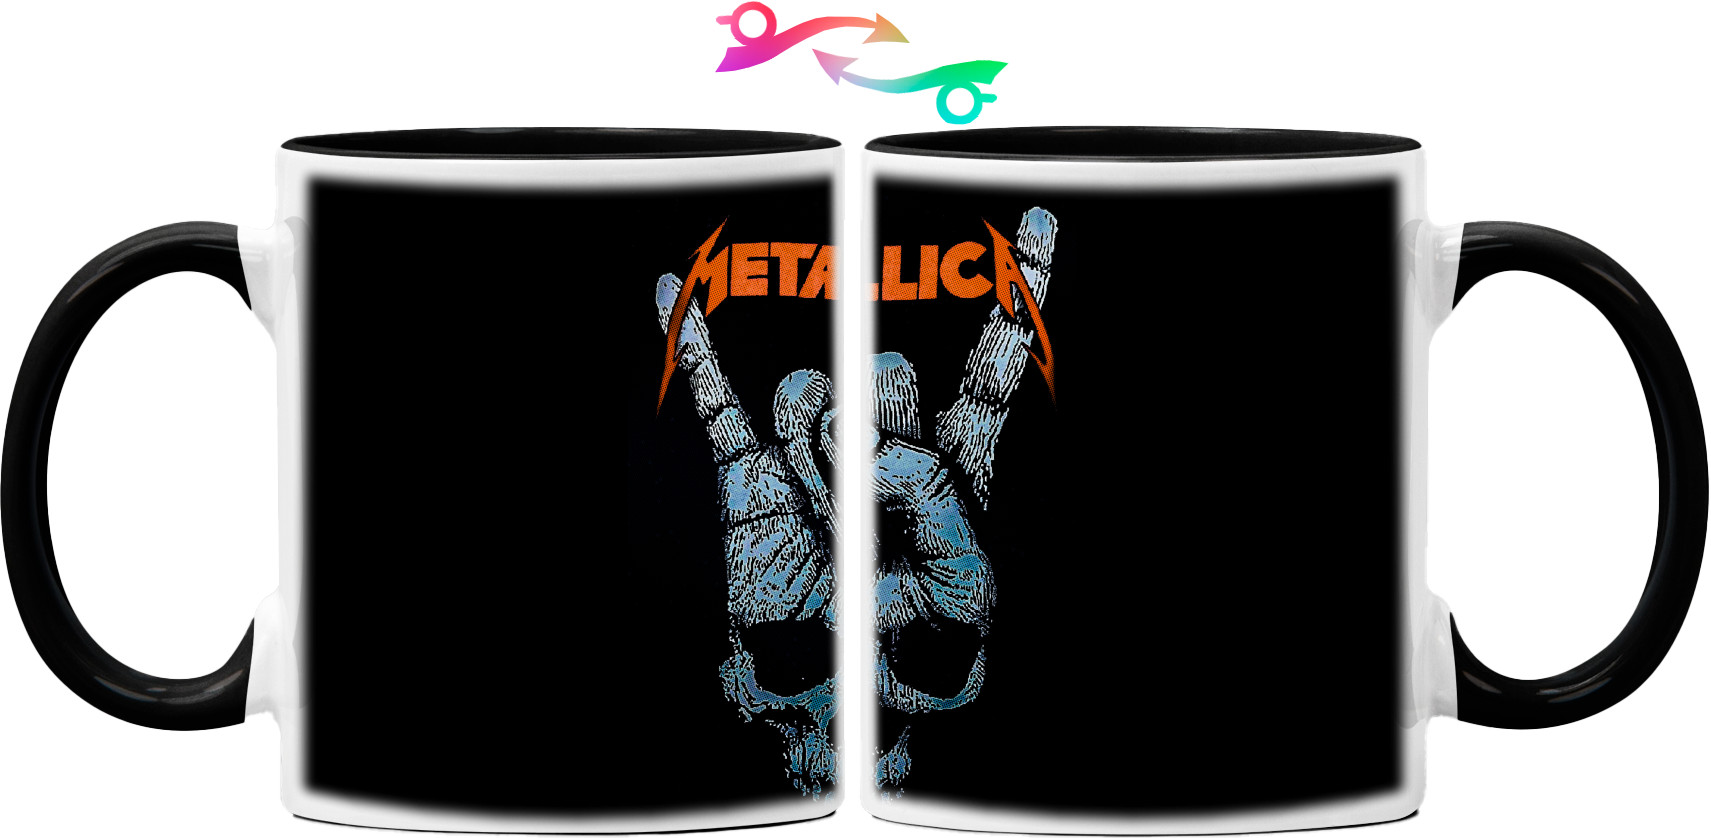 Metallica 30